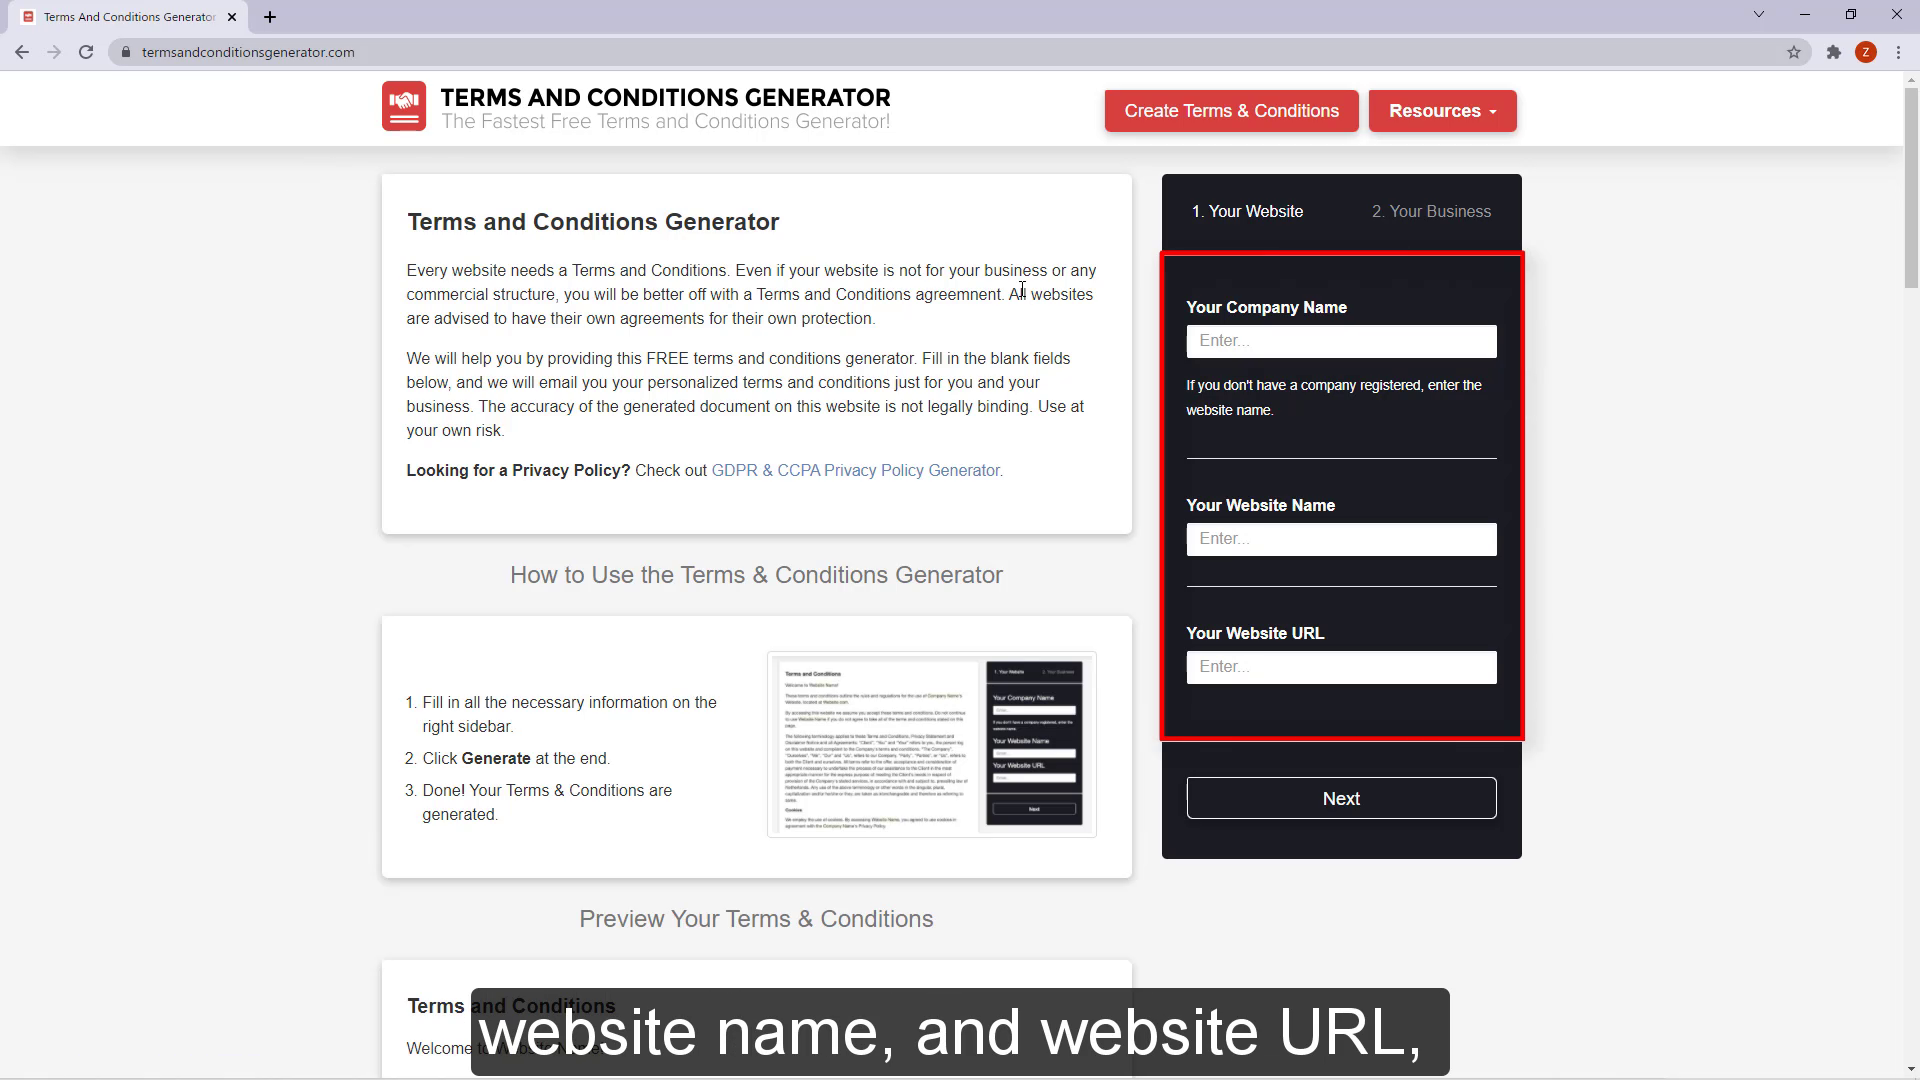 company name website and website URL 